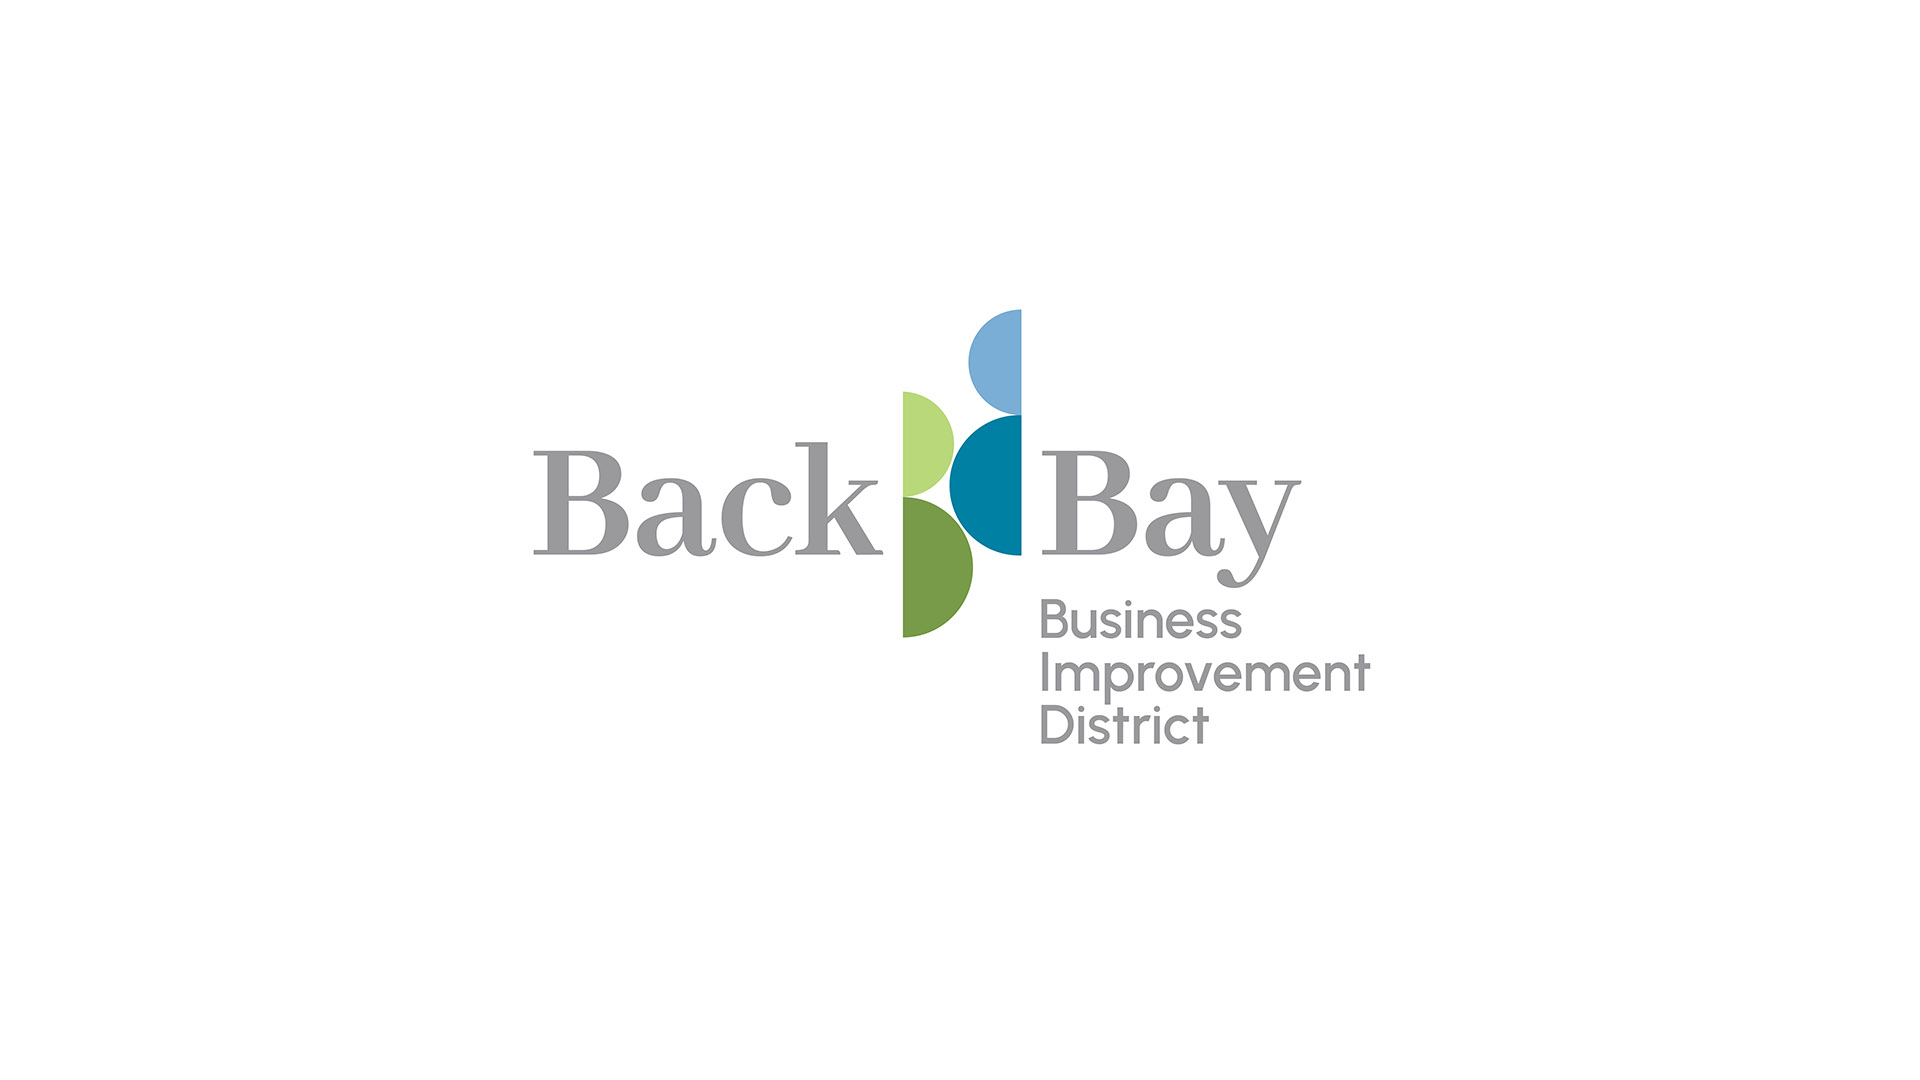 back bay business improvement district logo on white